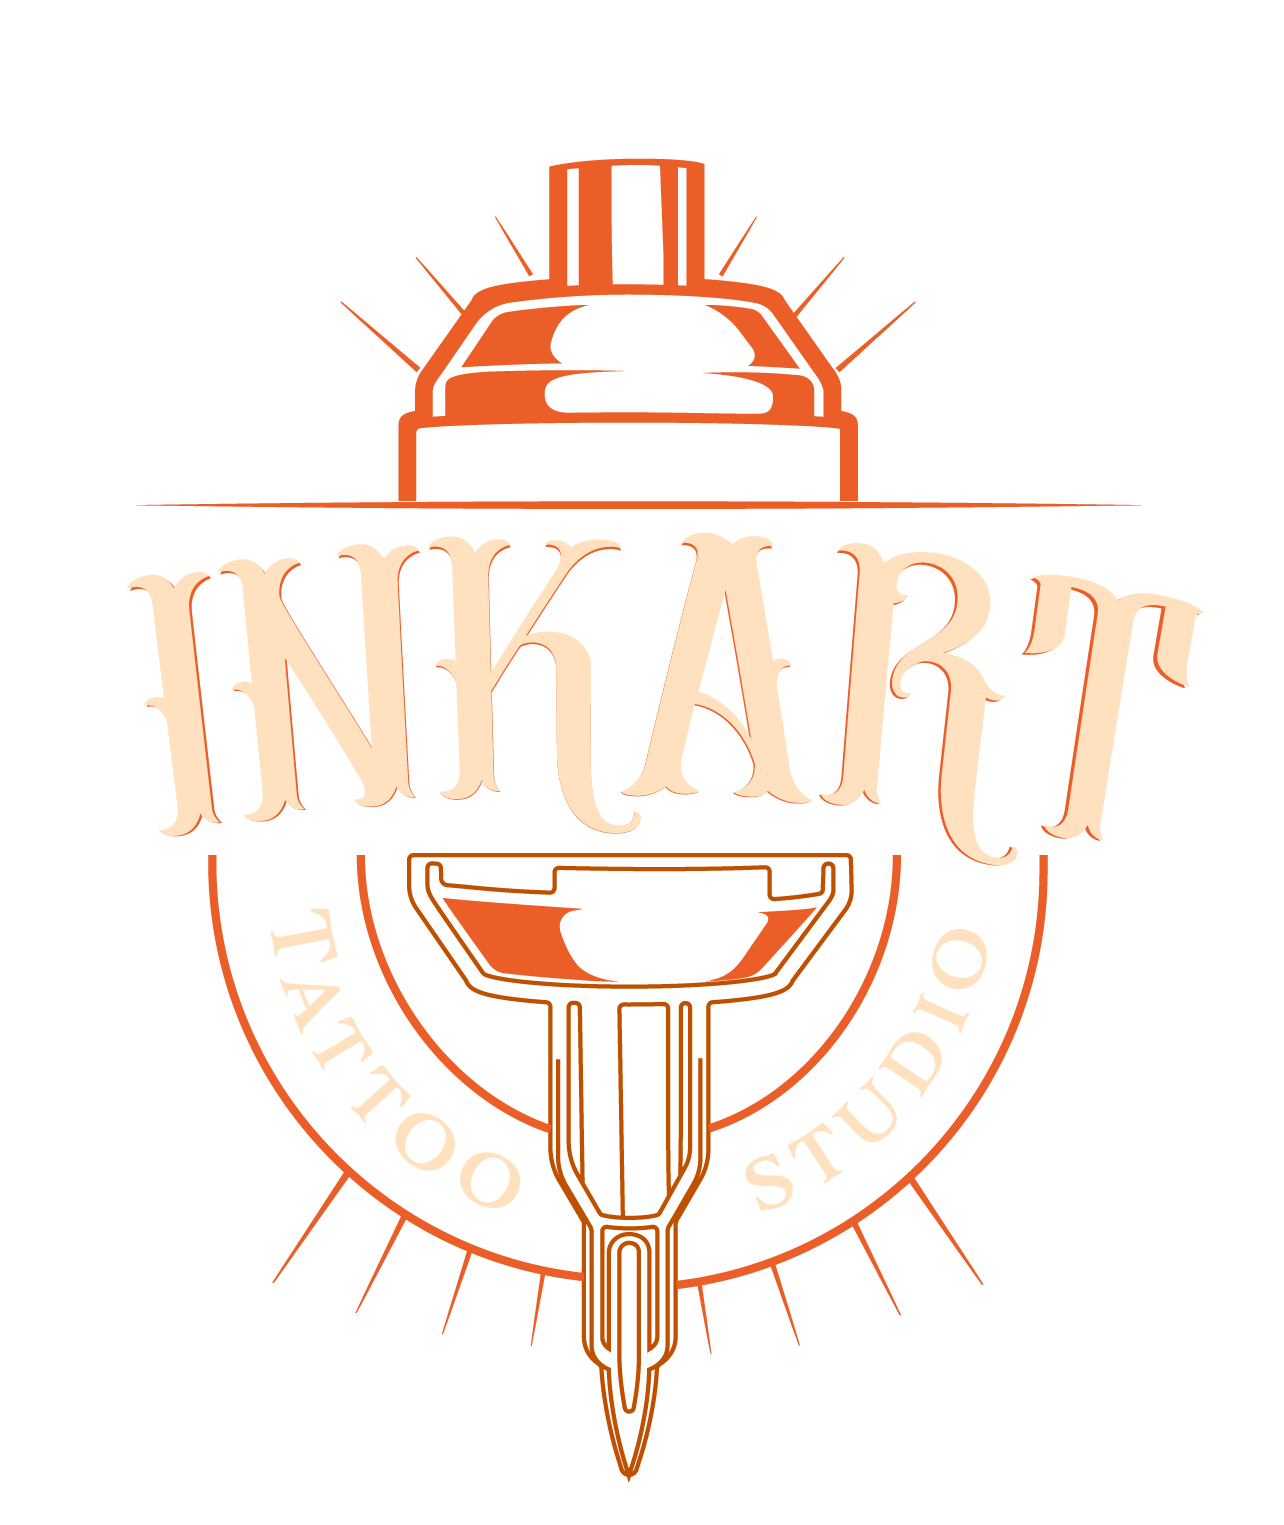 Inkrage Art  Tattoo Studio  Created to Create